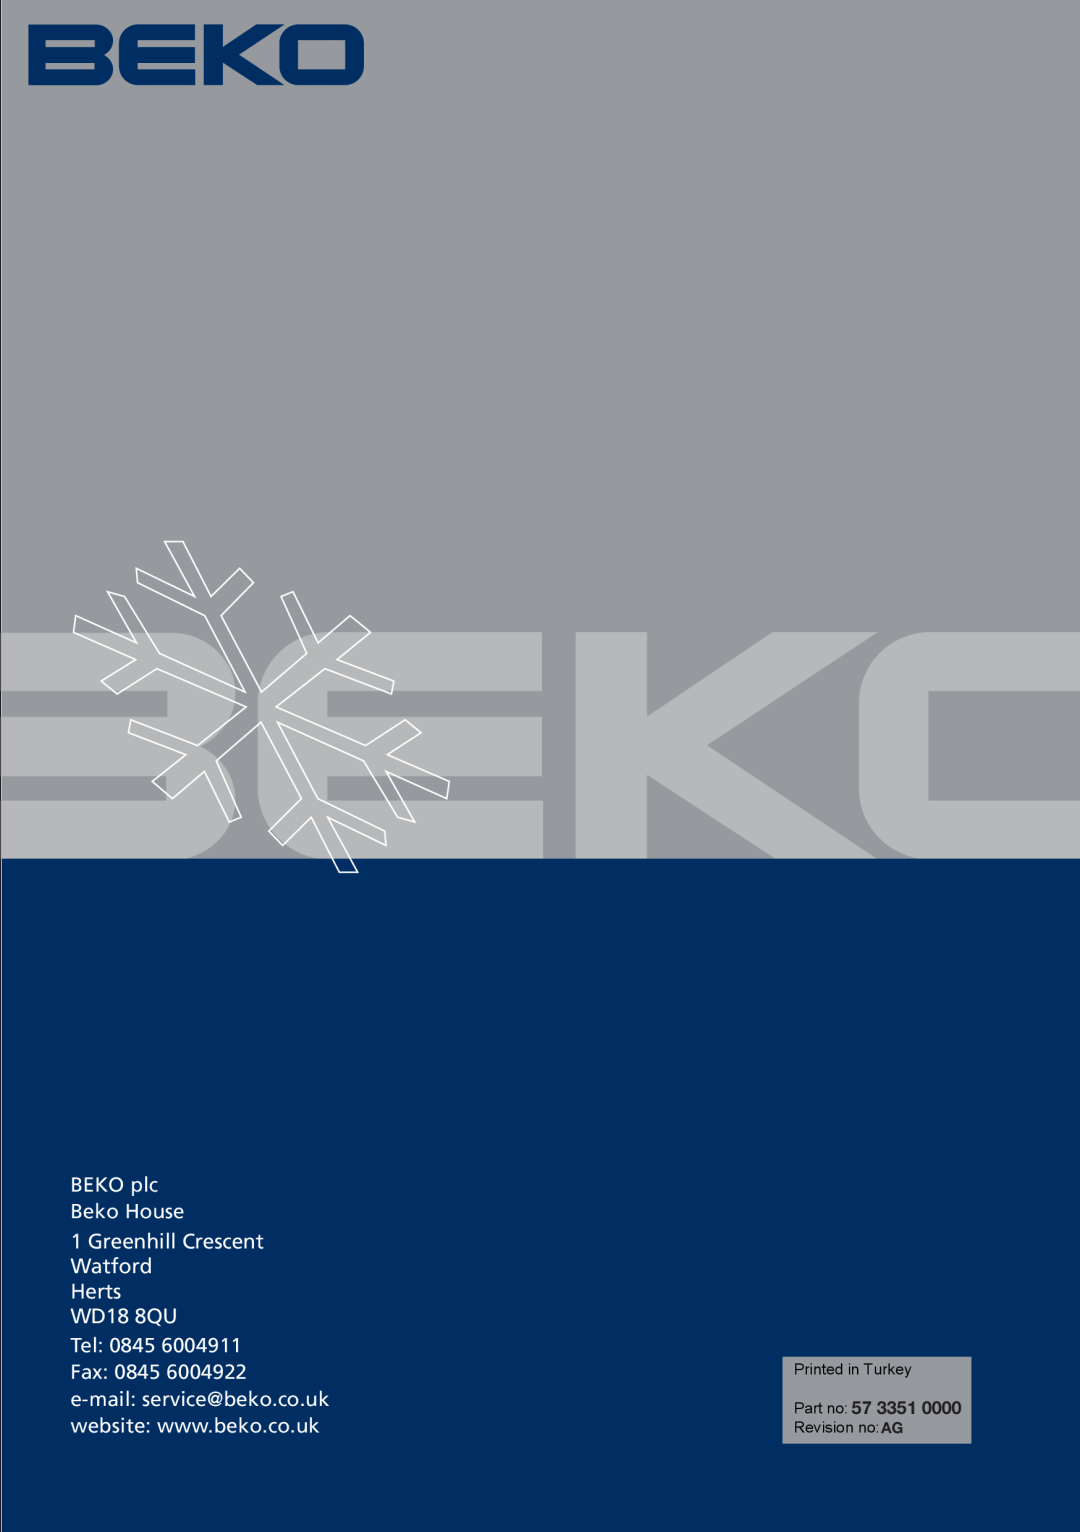 Beko QC55F manual BEKO plc Beko House 1 Greenhill Crescent Watford, Herts WD18 8QU Tel 0845 Fax, Revision no AG 